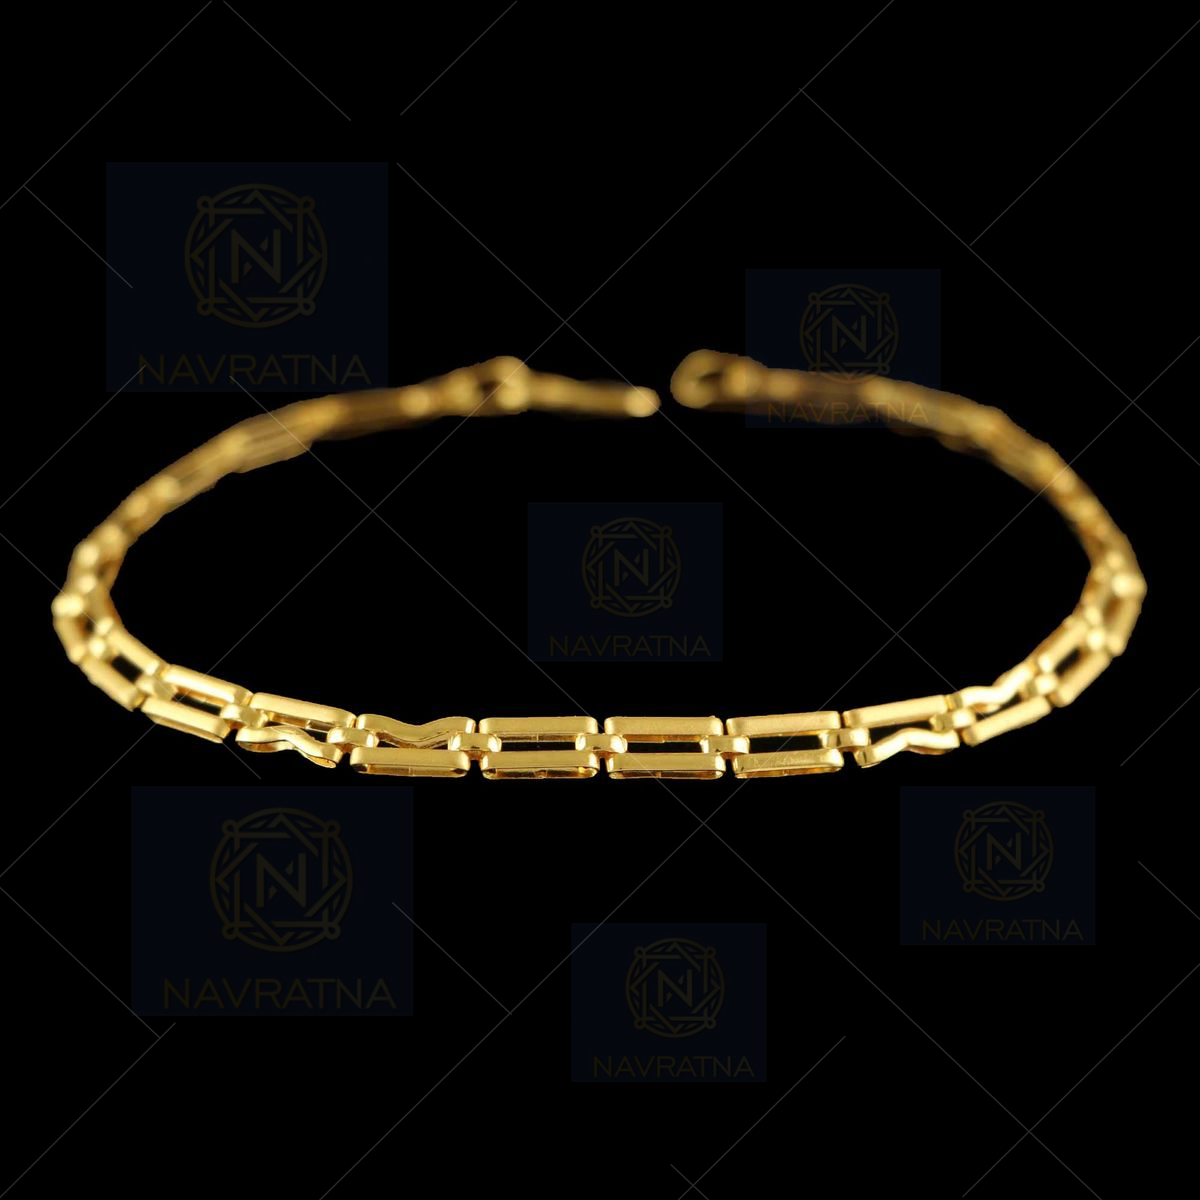 Men's Gold Bracelet Designs | 10 To 20 Grams Gold Bracelet Designs 🔥 -  YouTube